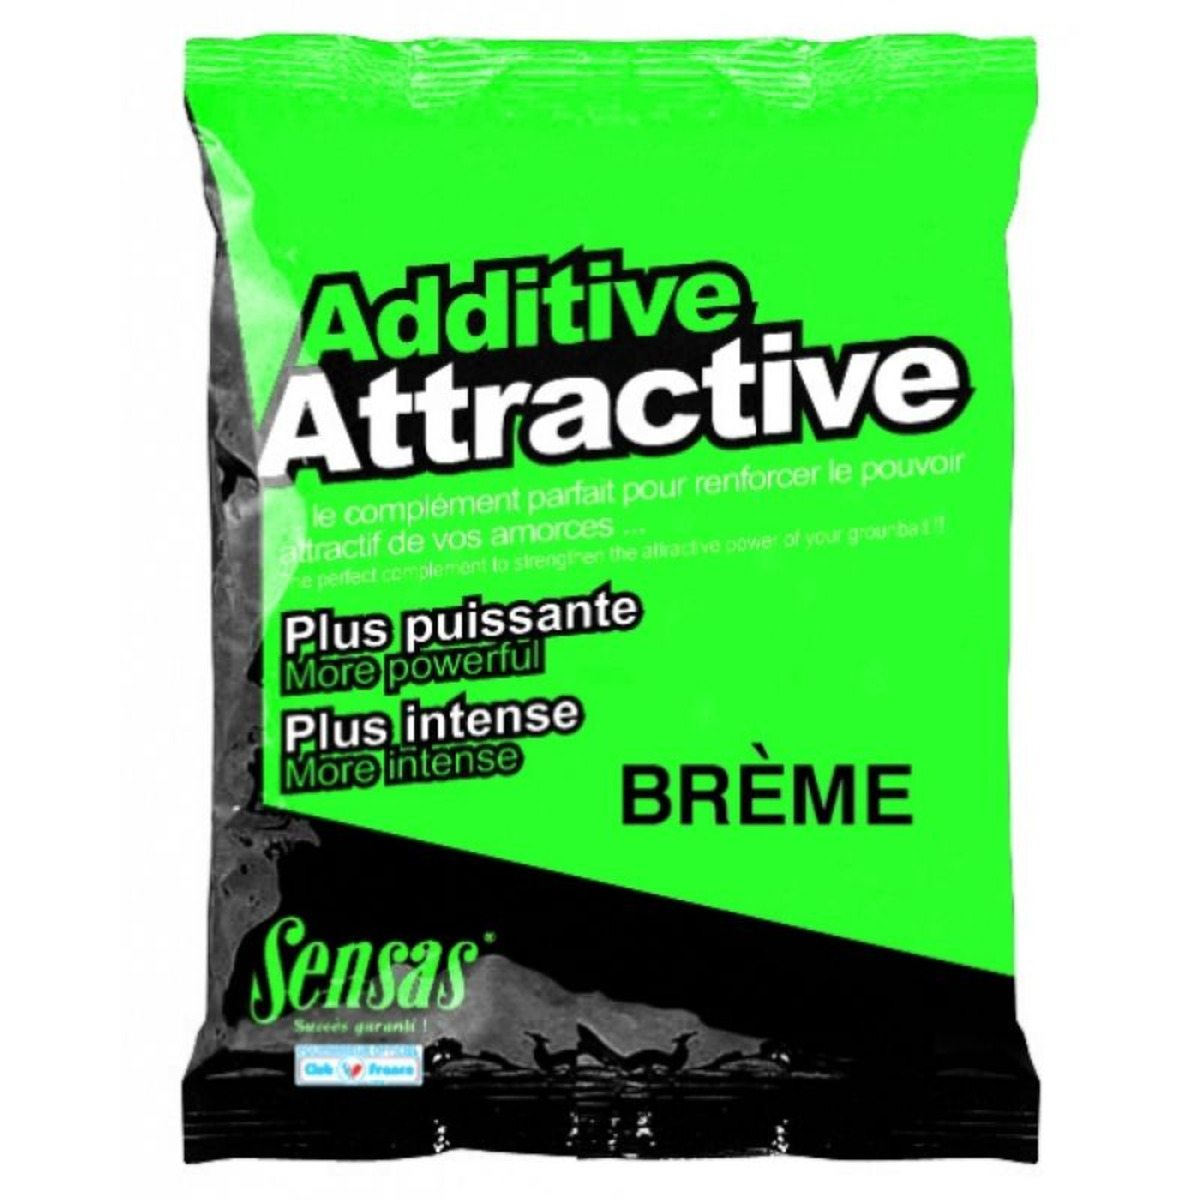 Sensas Additif Attractive - Breme - 250 g